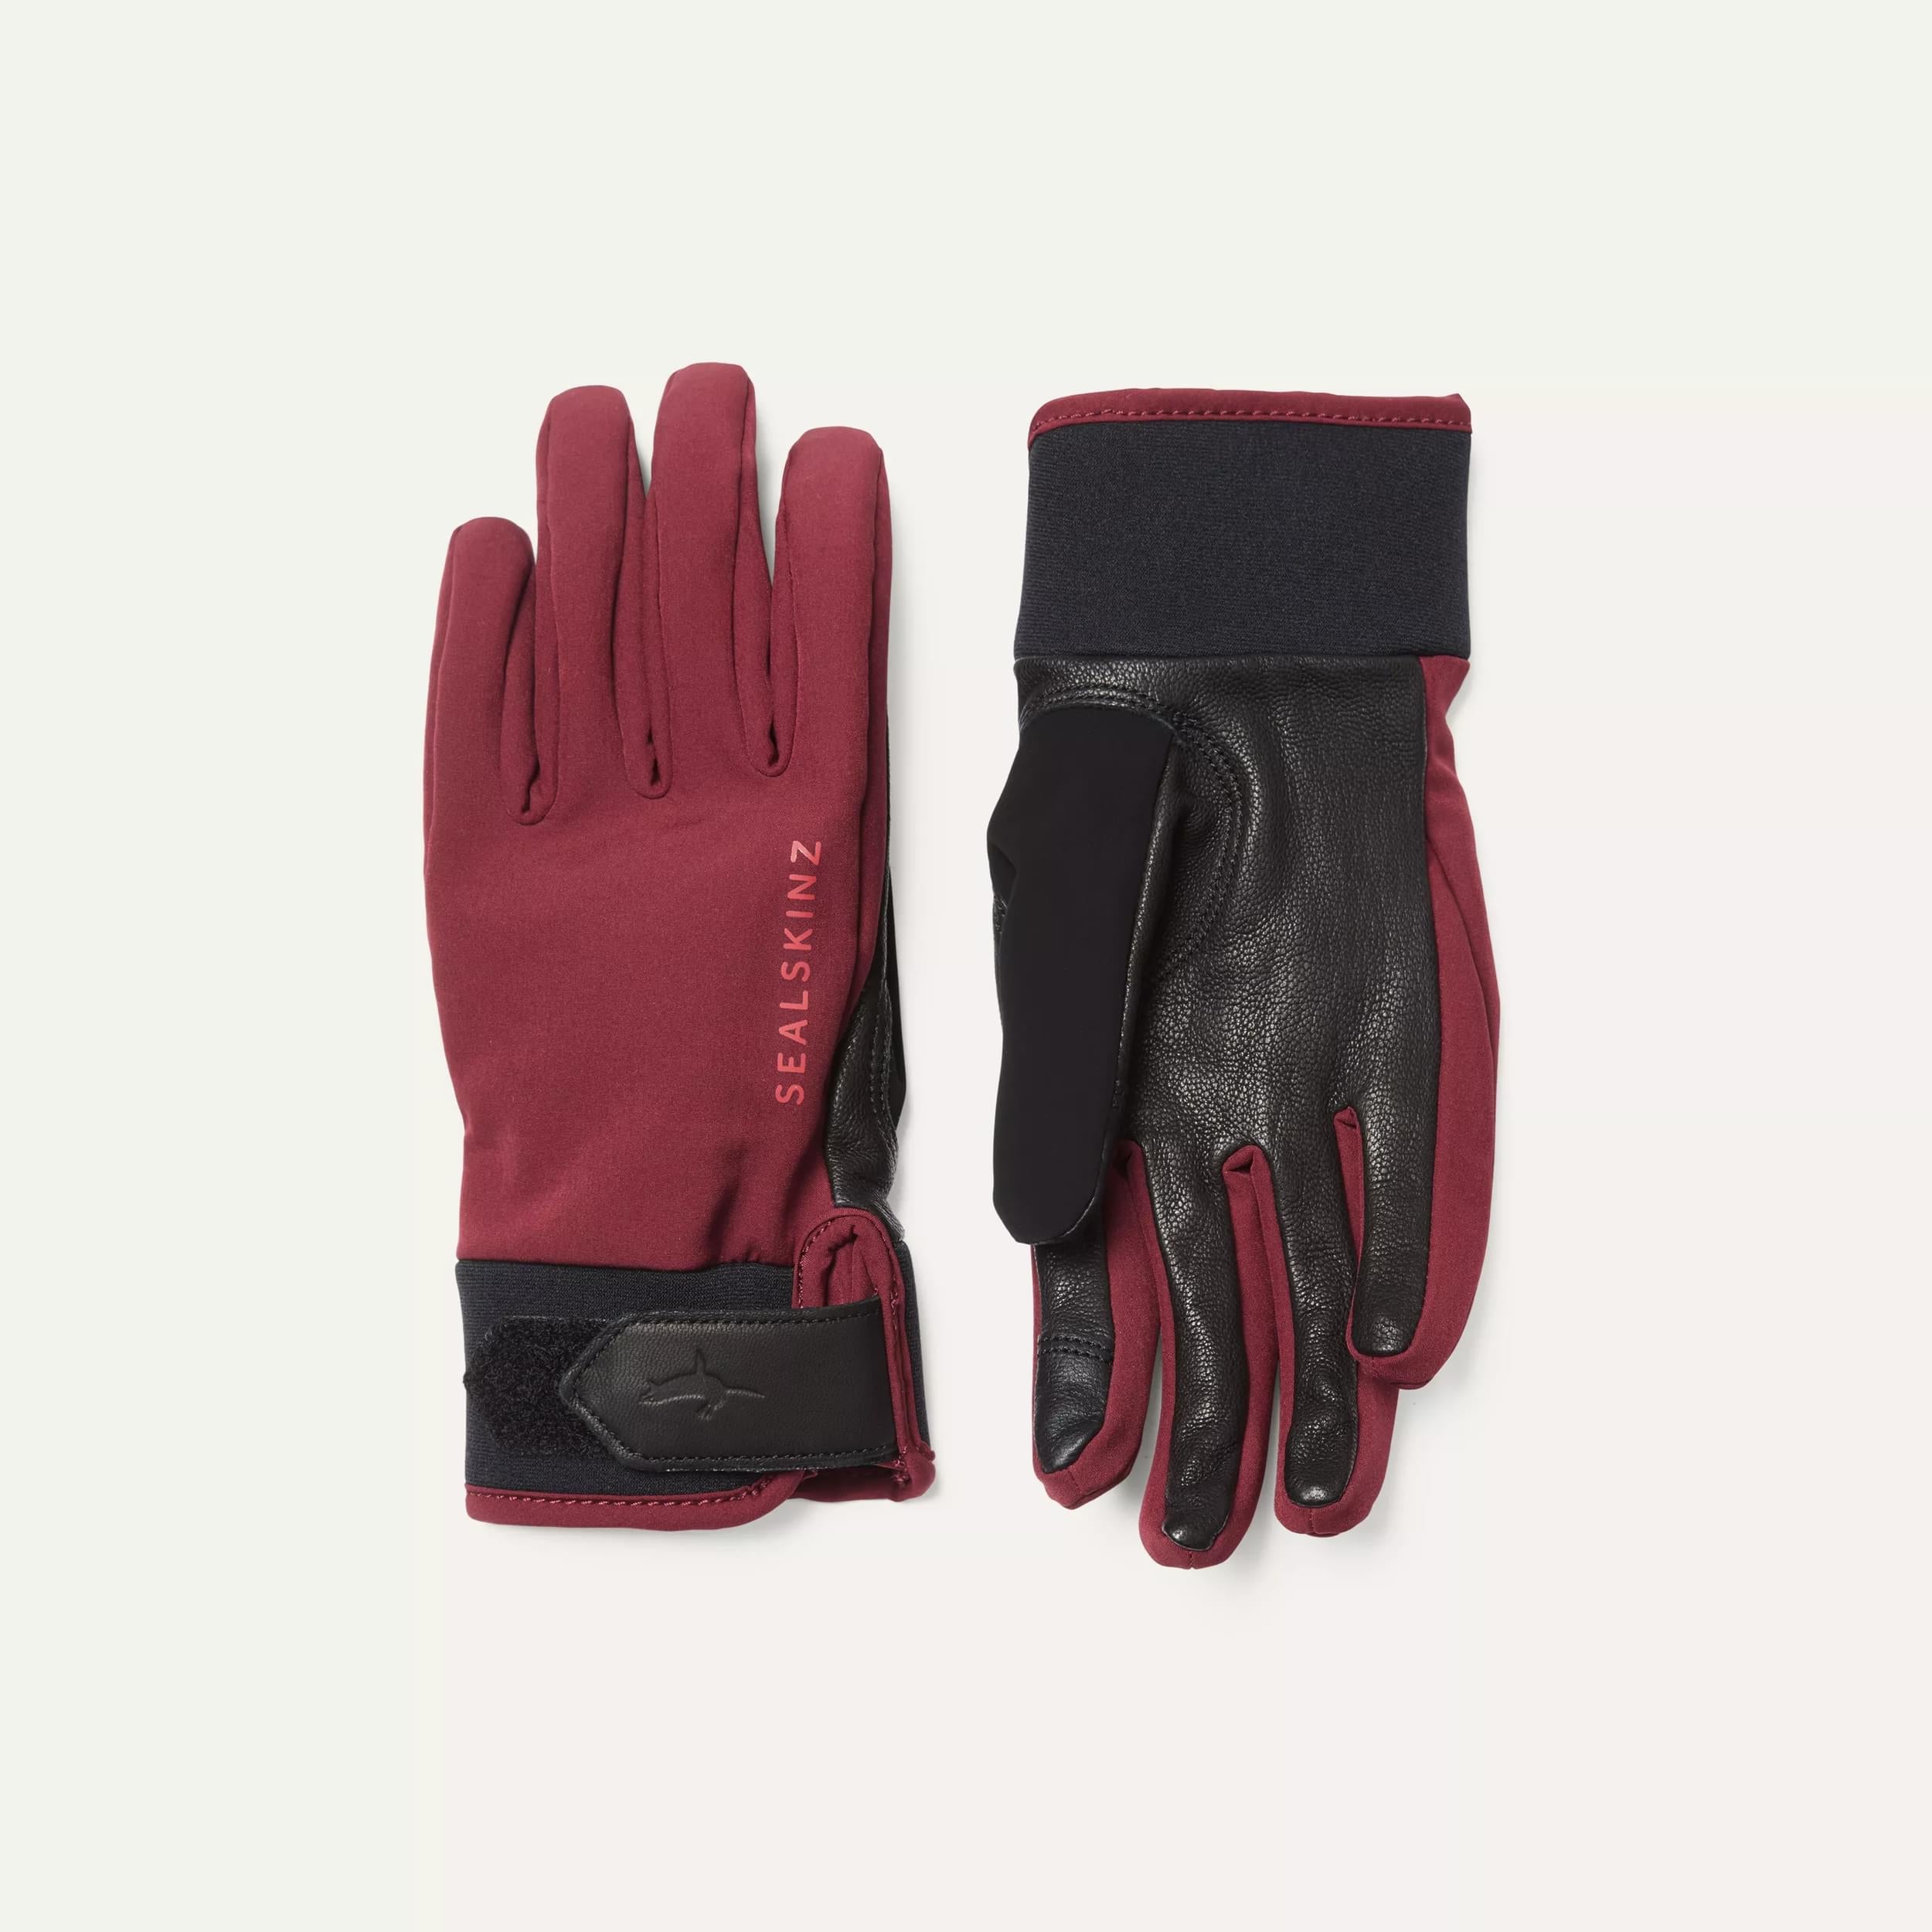 100% Waterproof, Windproof & Breathable Gloves